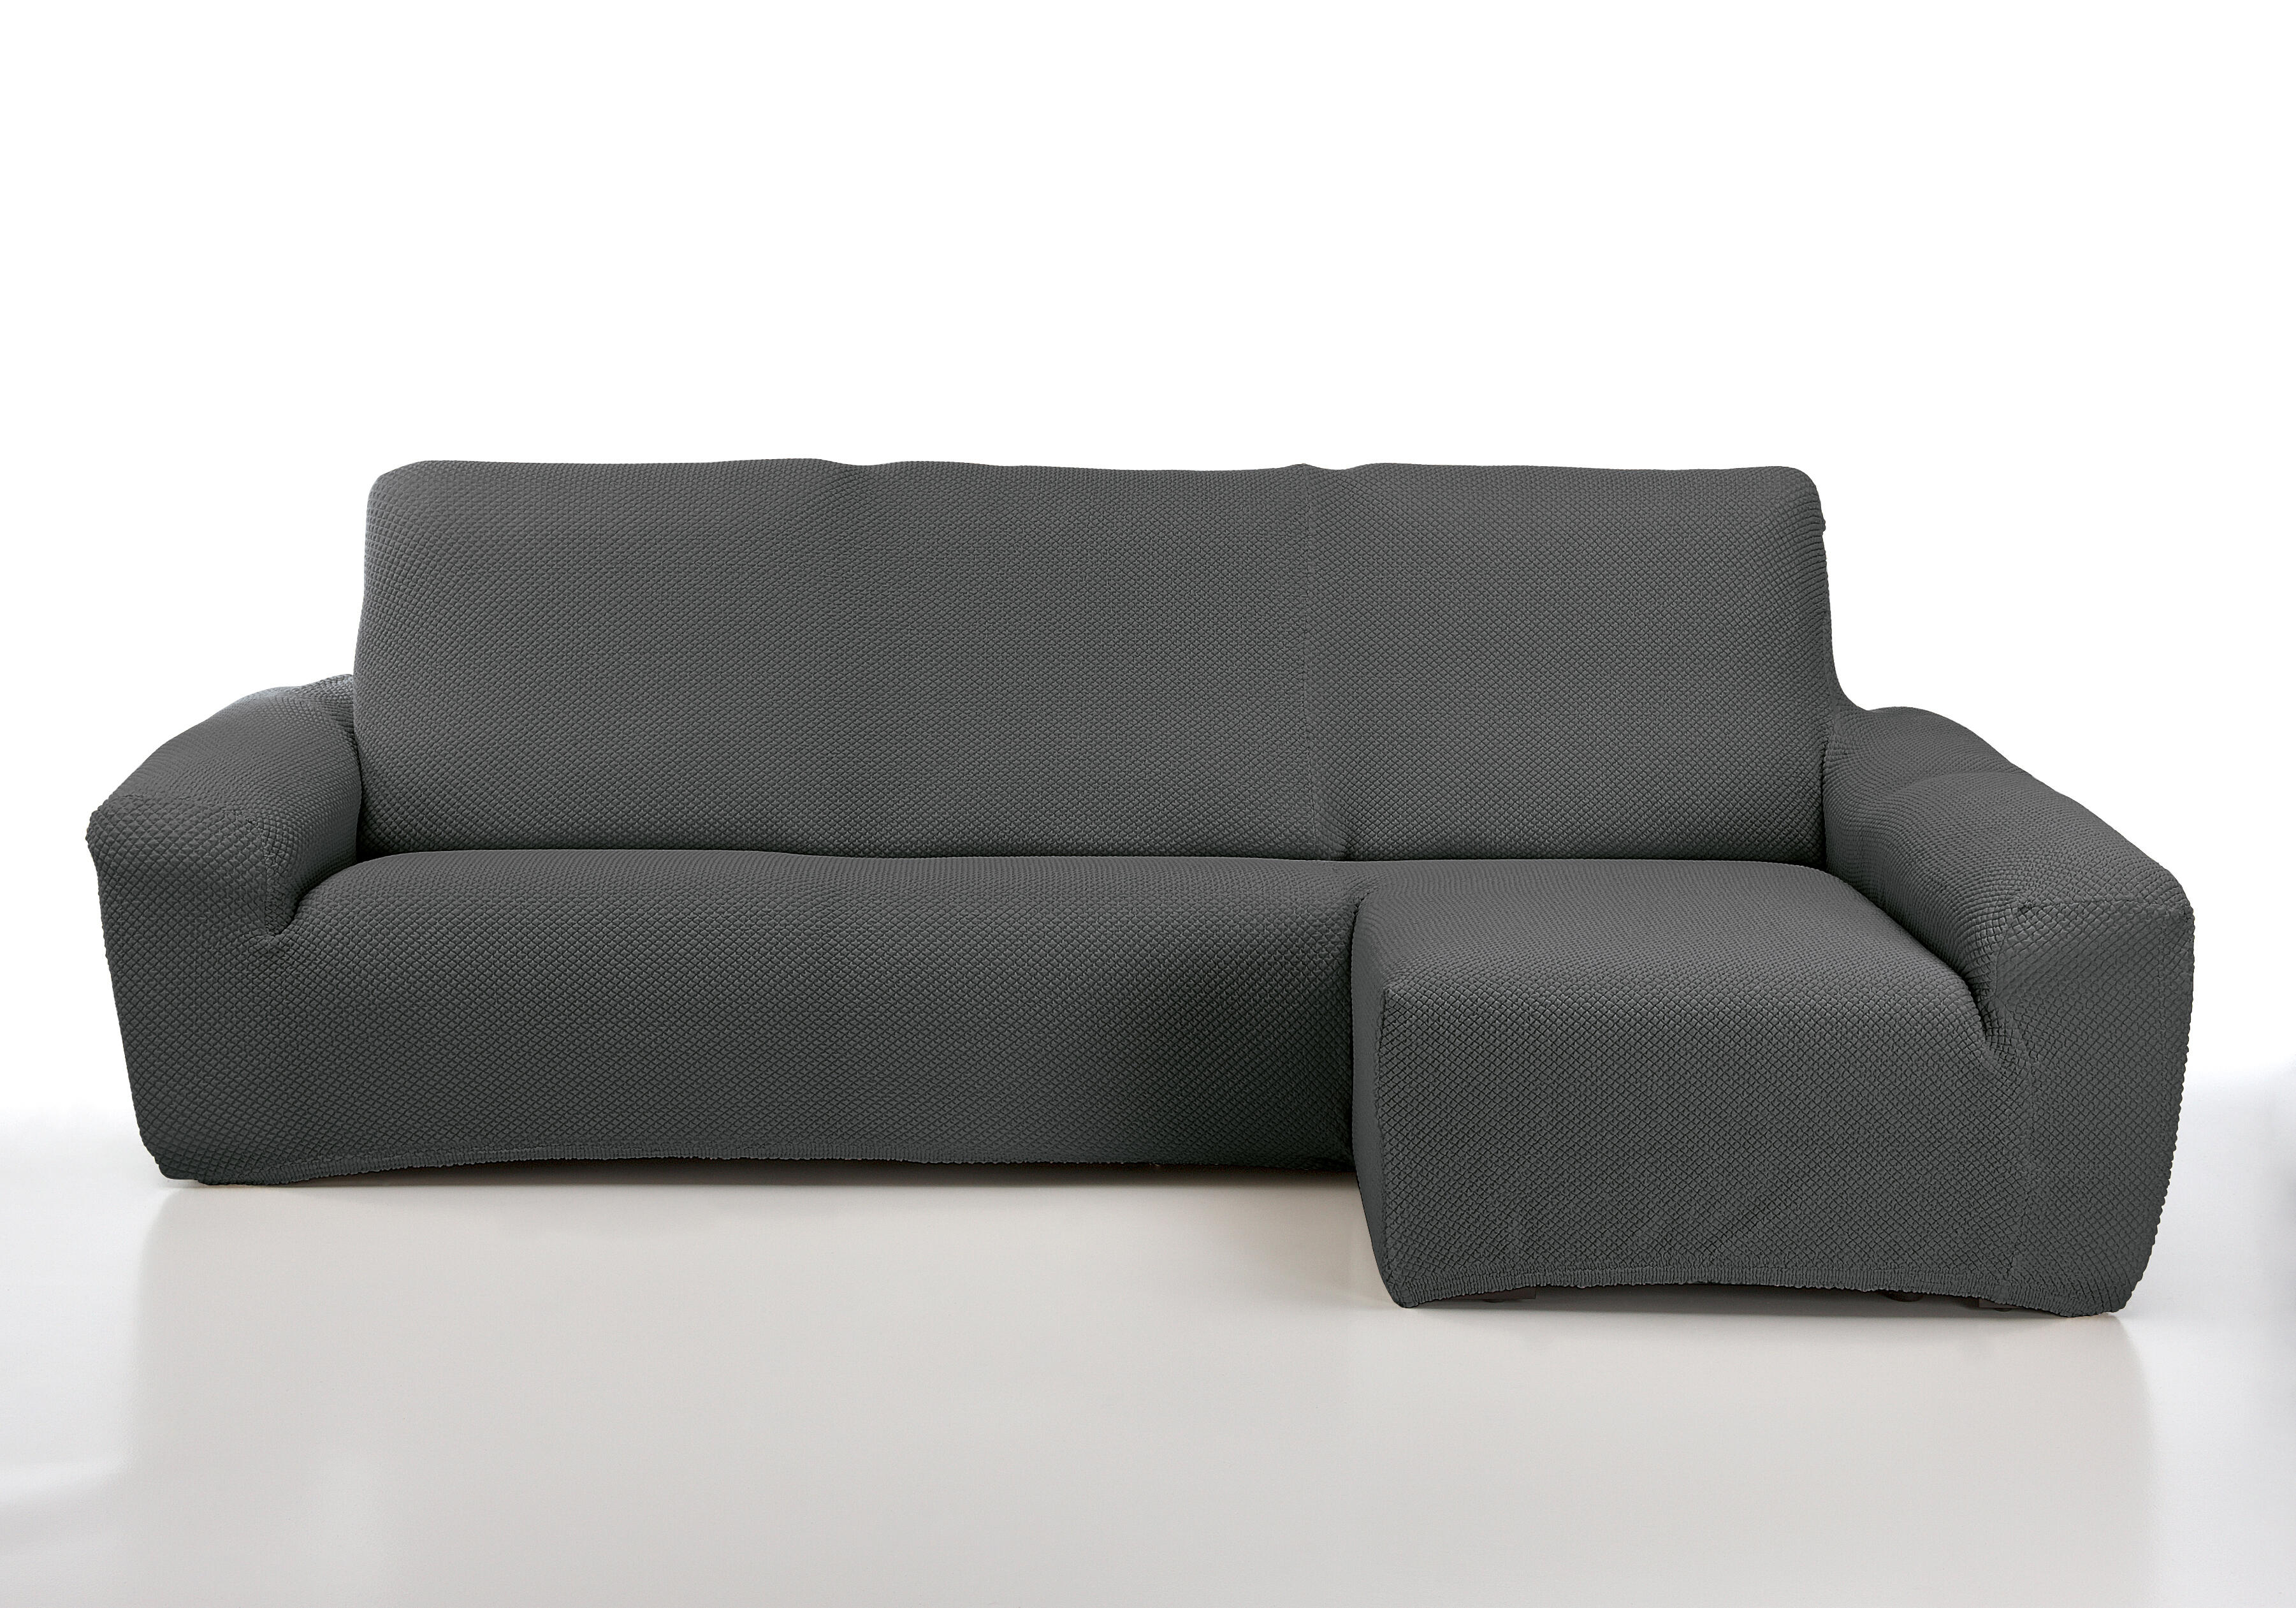 Funda para sofa chaise longue 290 cm brazo derecho - Leire - Color 06 Gris